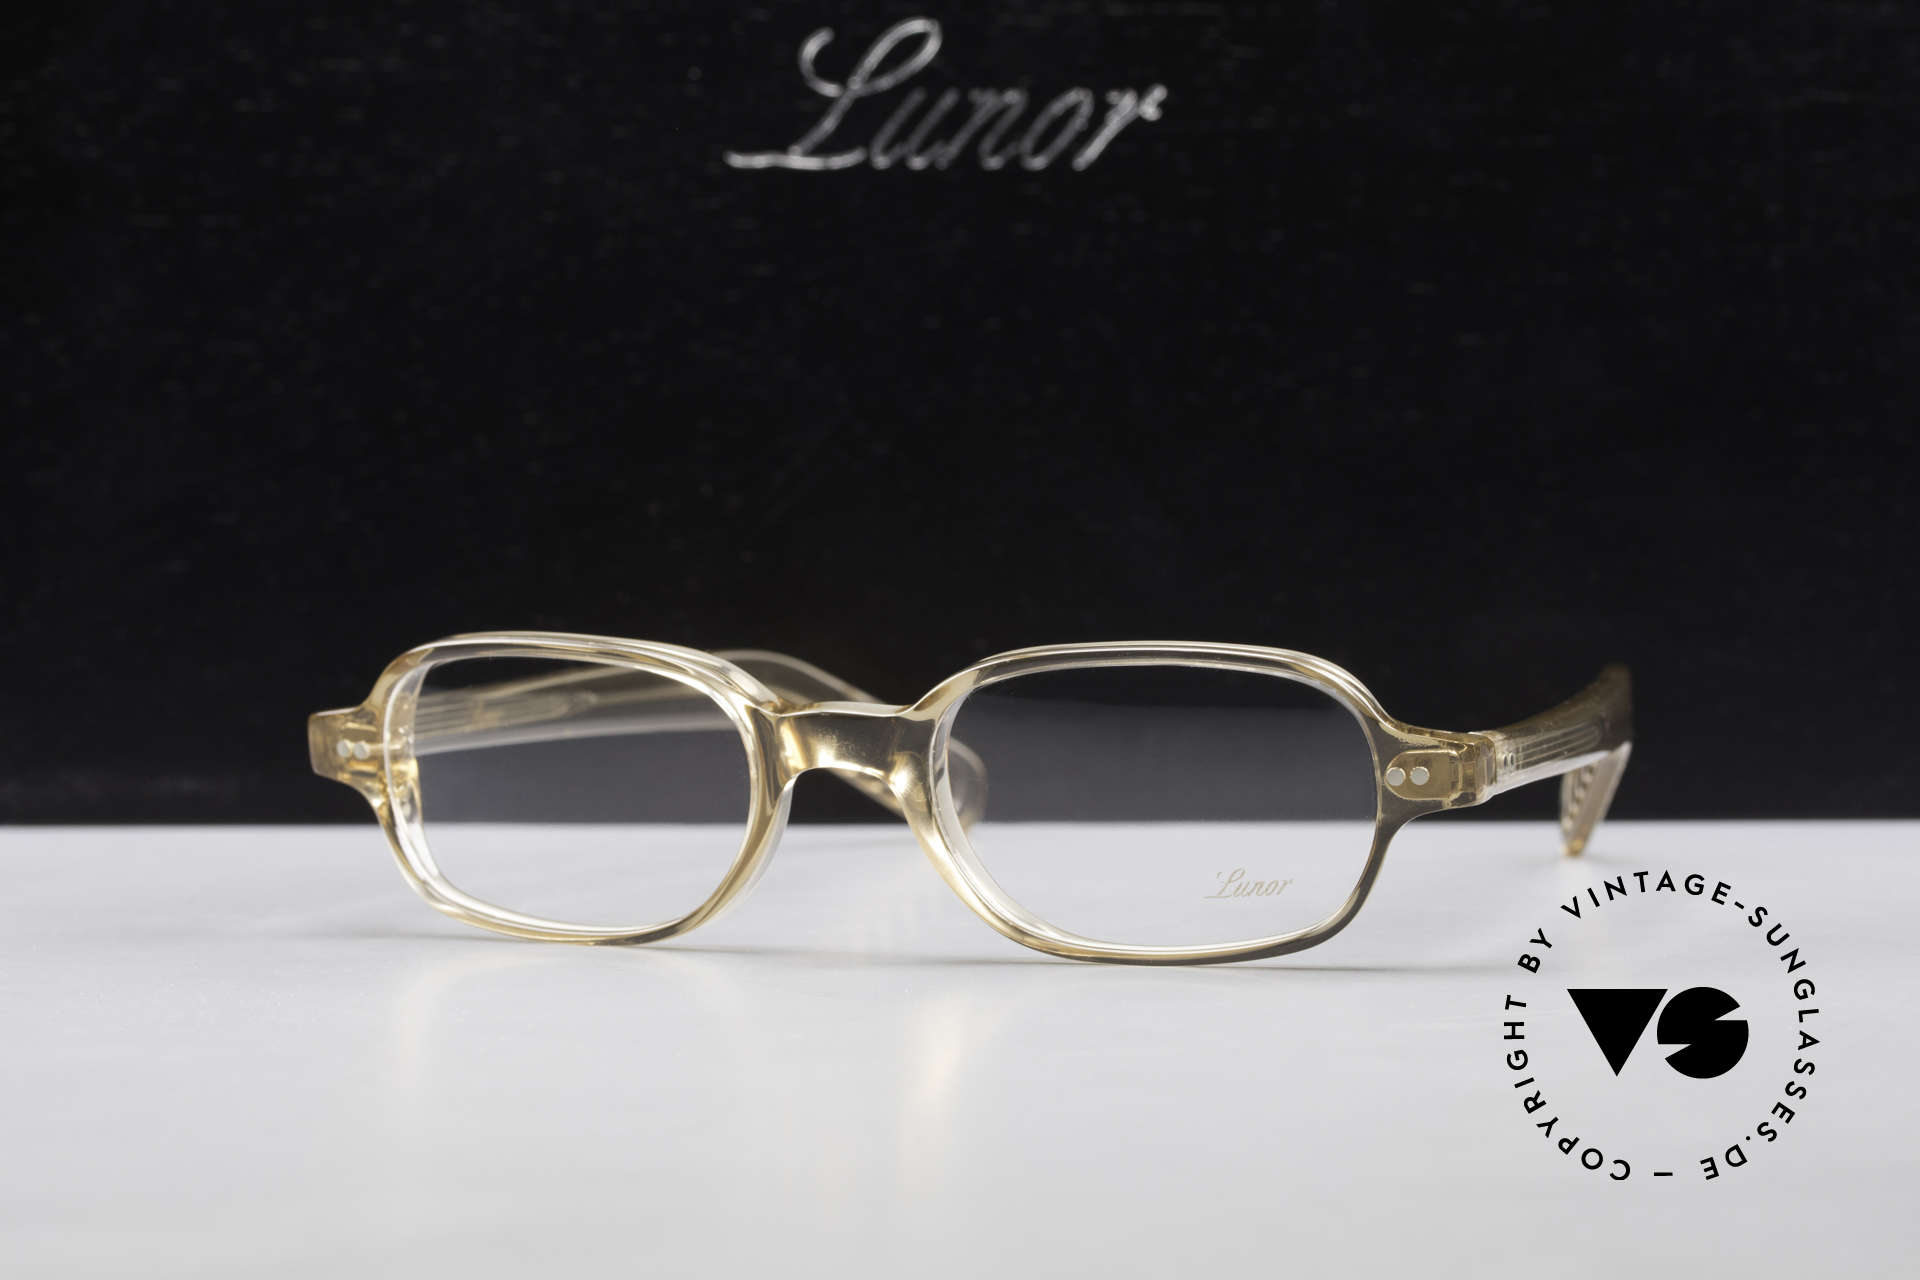 Lunor A56 Classic Lunor Acetate Glasses, Size: medium, Made for Men and Women